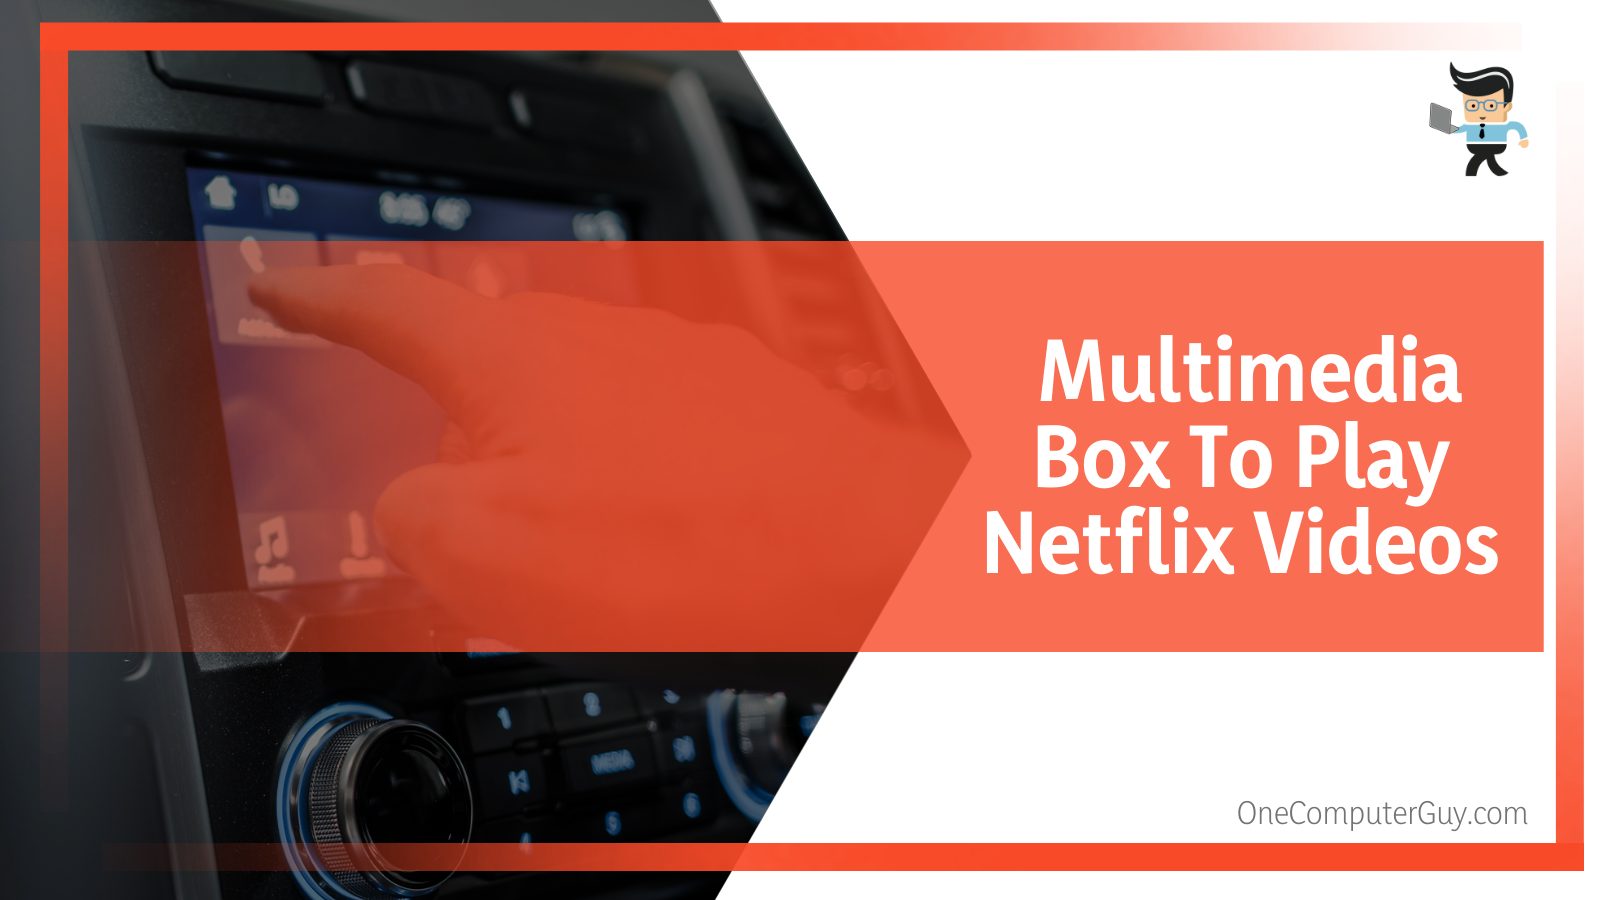 Using a Multimedia Box To Play Netflix Videos